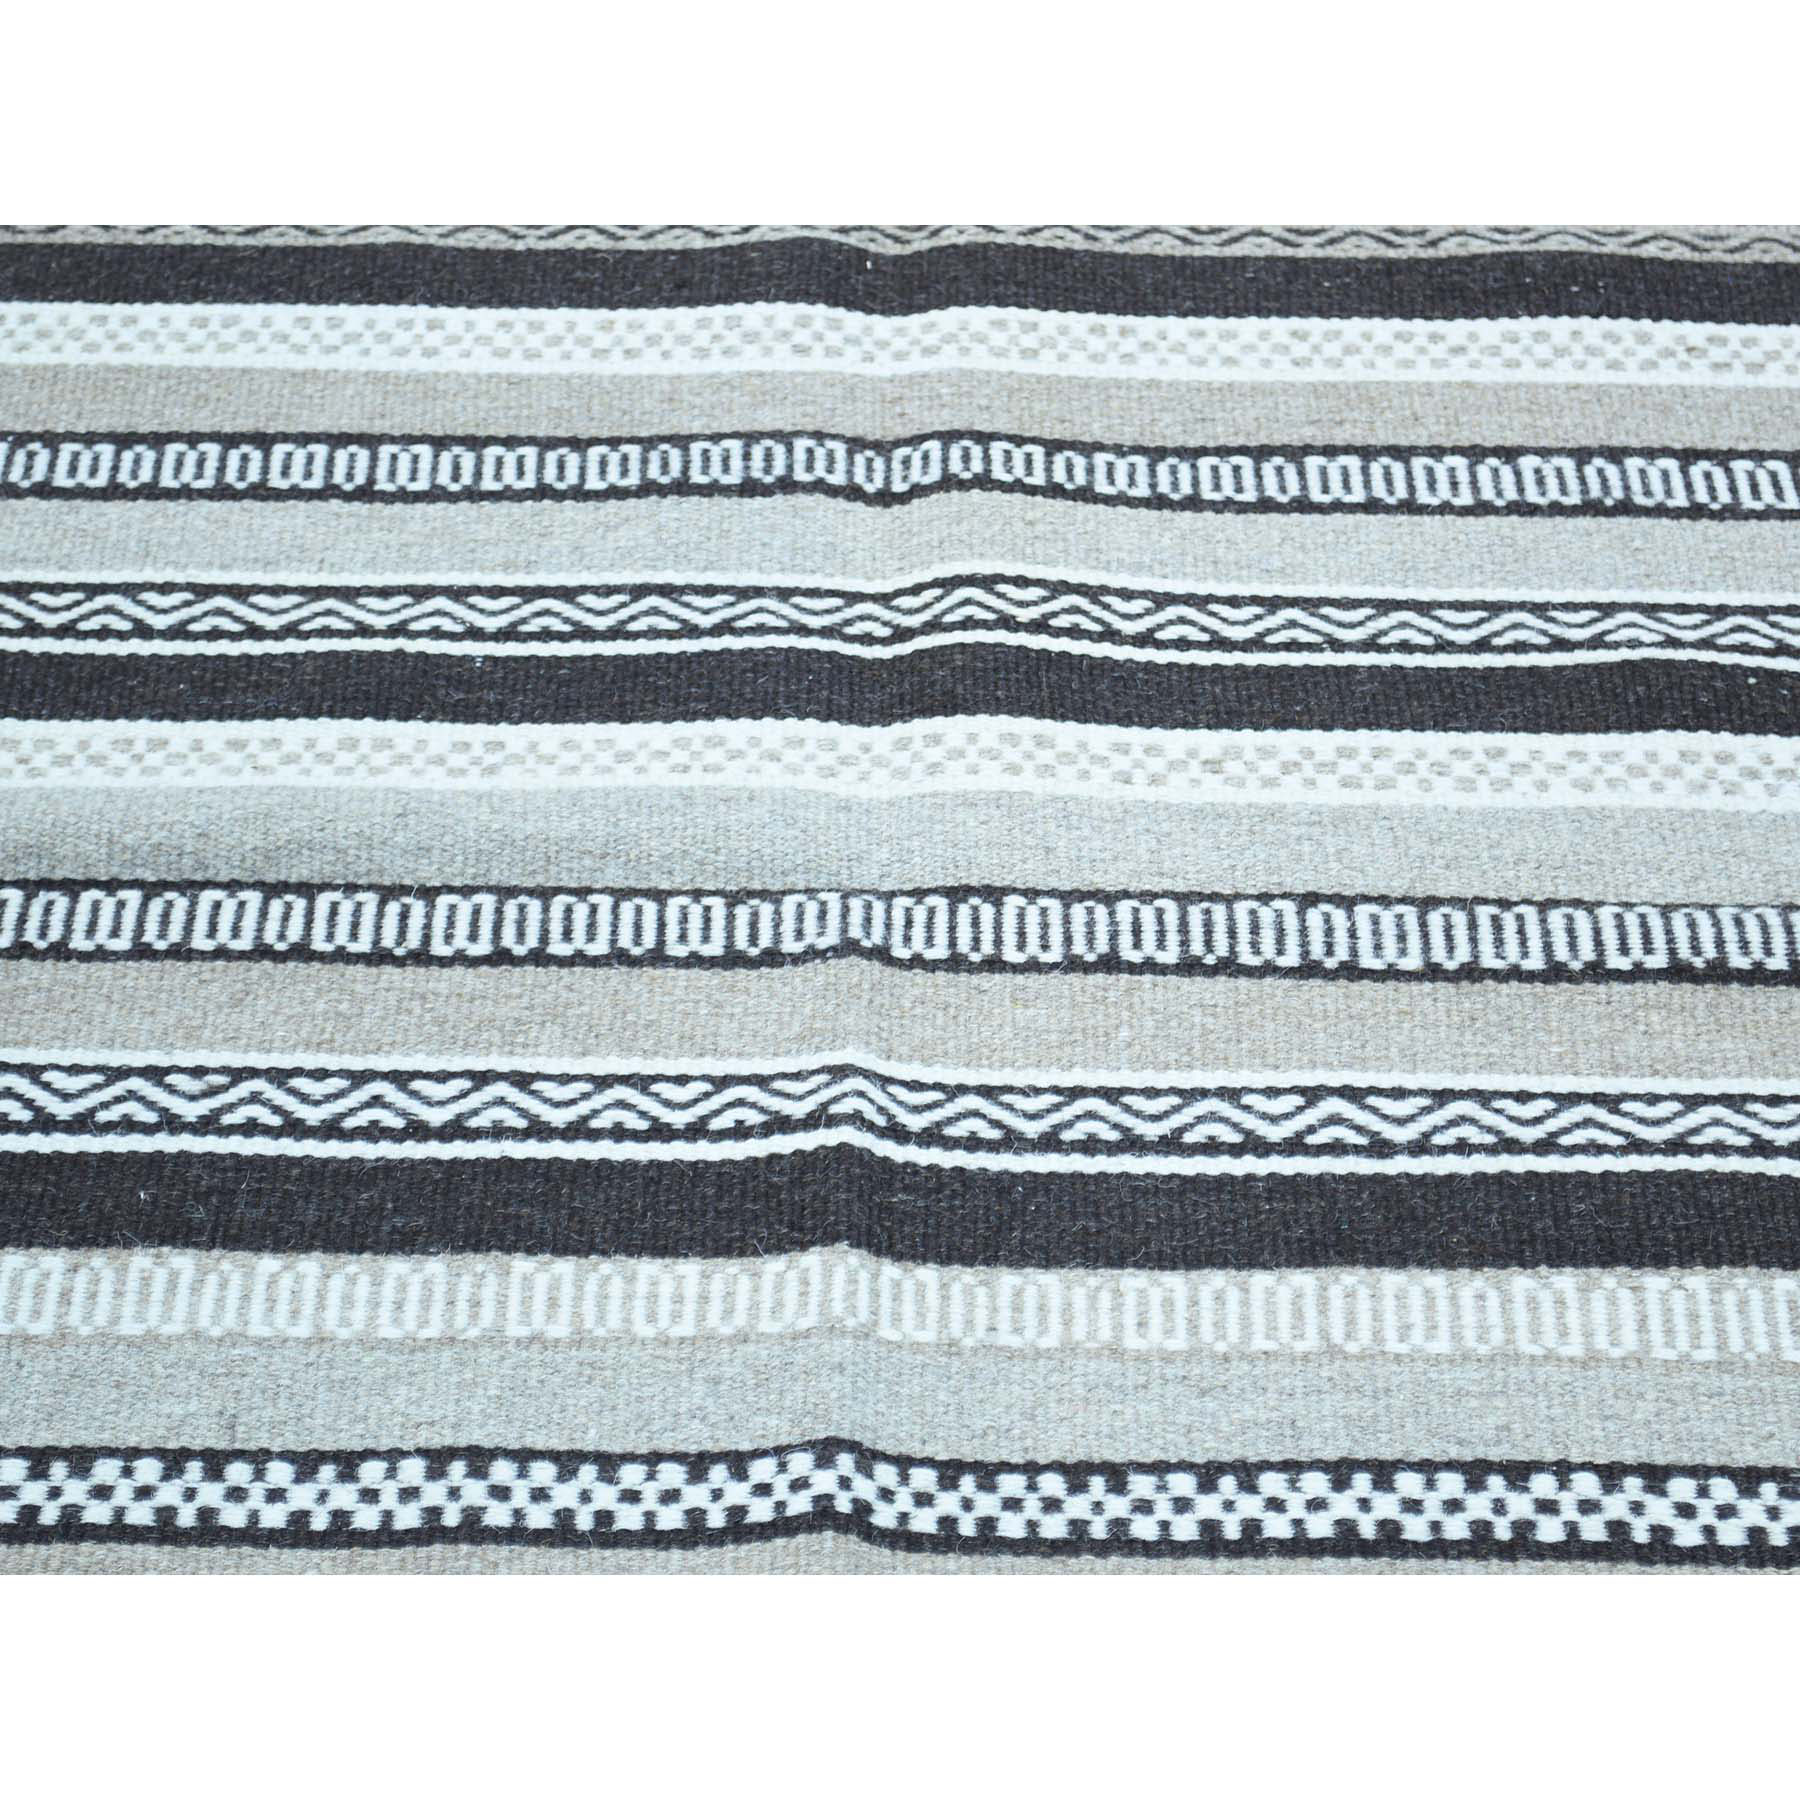 4-1 x6- Flat Weave Reversible Kilim Pure Wool Hand-Woven Striped Rug 